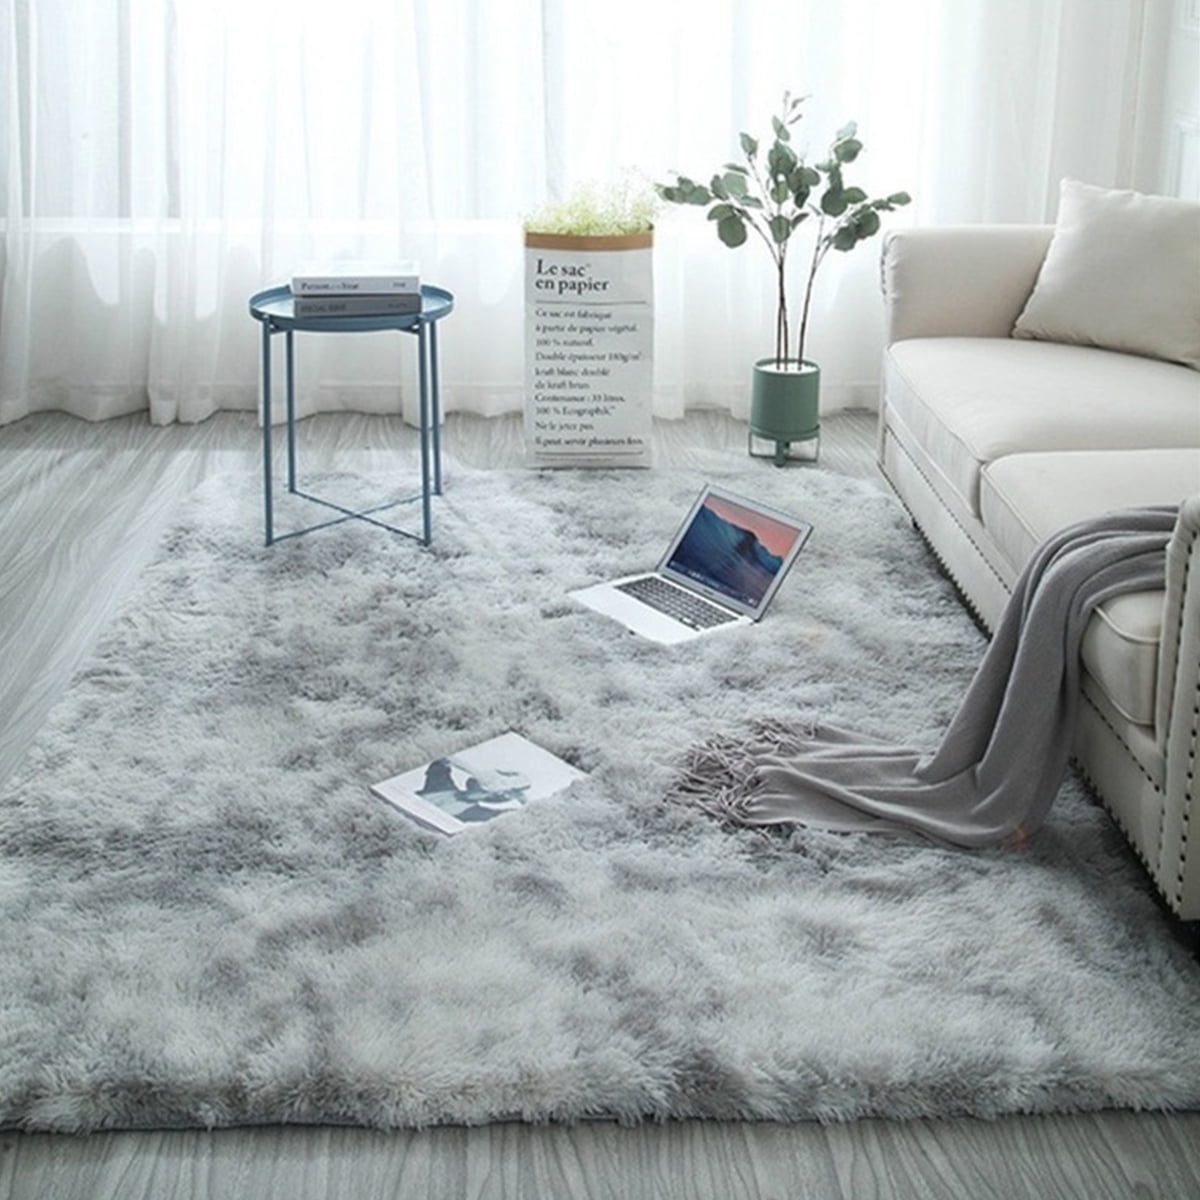 Details about   Australian Sheepskin Rug Ivory 2'x3' Bedroom Carpet One Pelt Furry Rug 